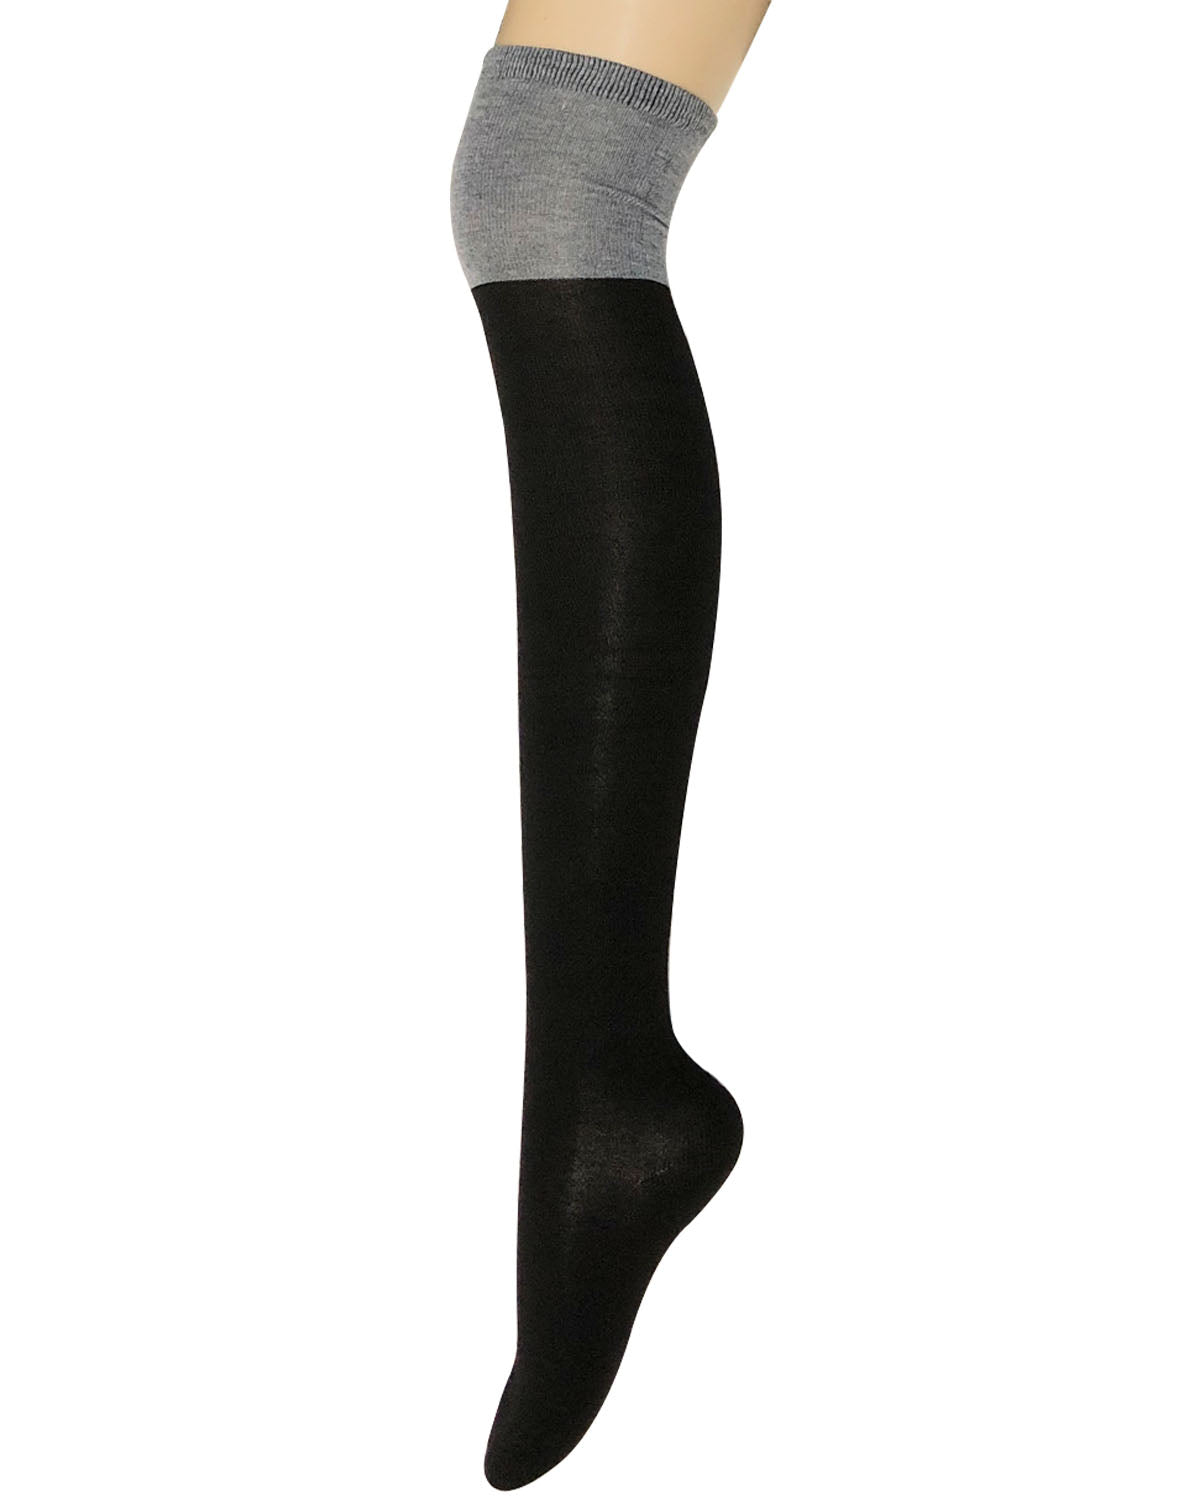 WrapablesÂ® Women's Two-Tone Knee High Boot Socks